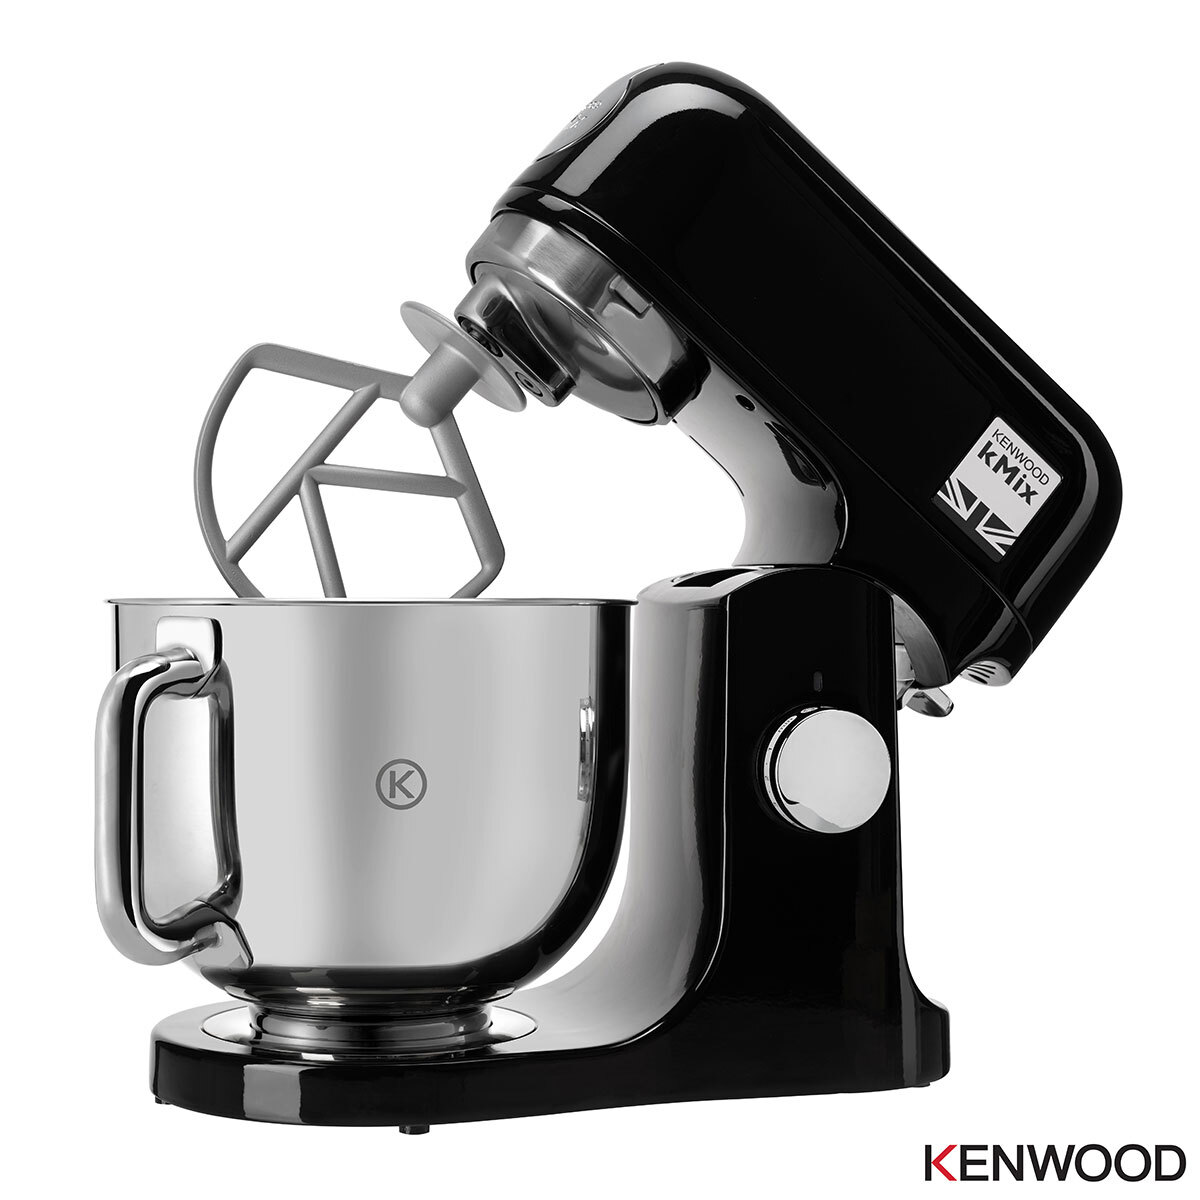 Kenwood kMix Stand Mixer in Black, KMX750AB | Costco UK